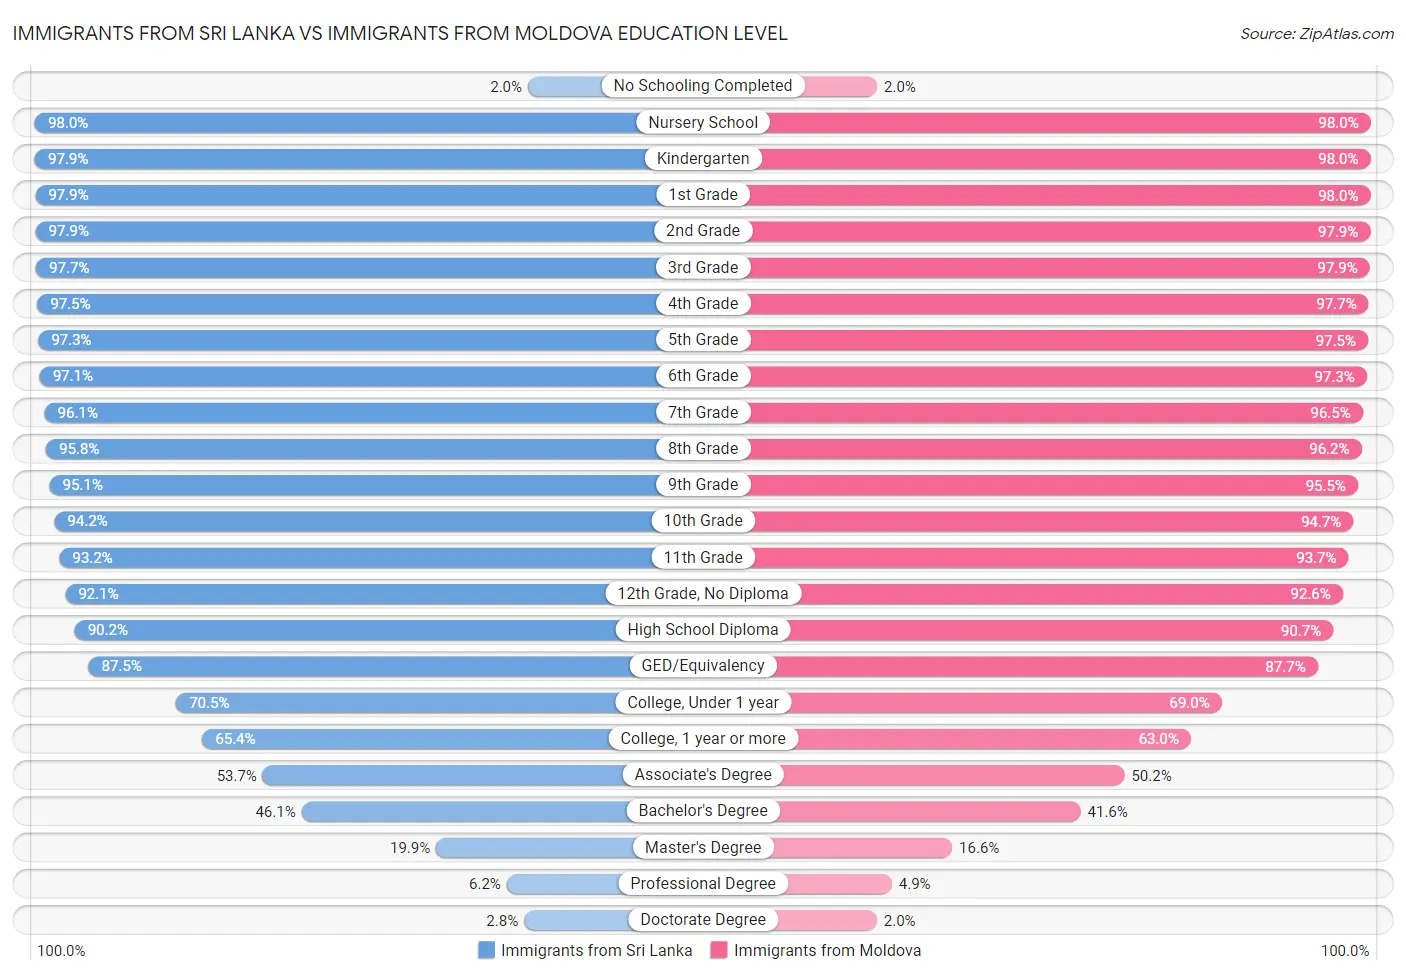 Immigrants from Sri Lanka vs Immigrants from Moldova Education Level